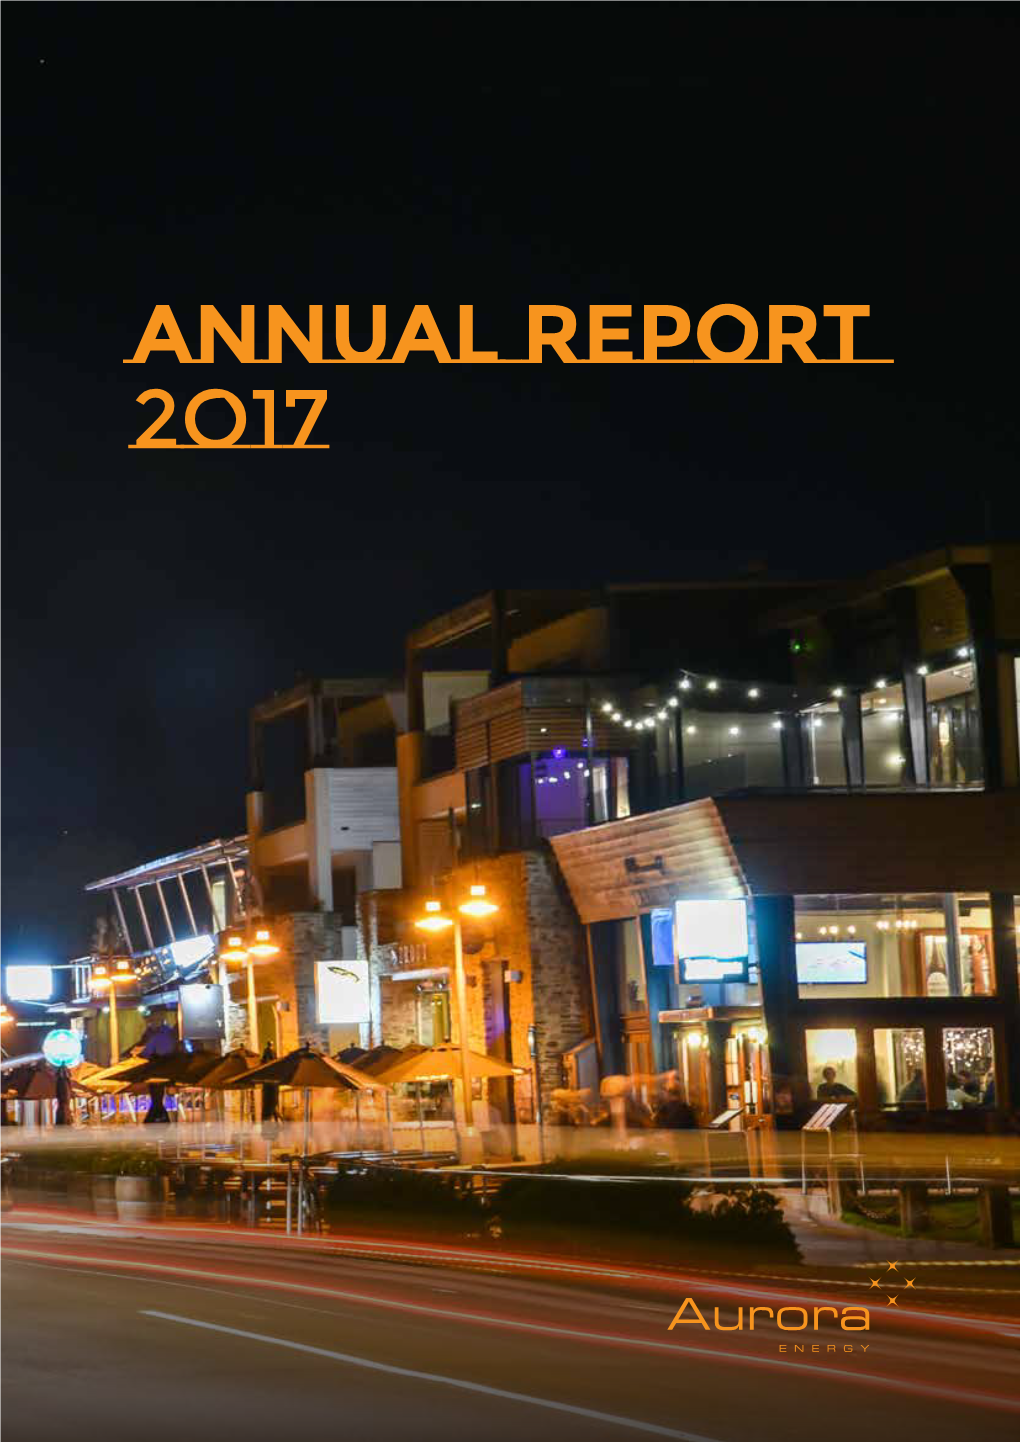 Annual Report 2O17 Aurora Energy